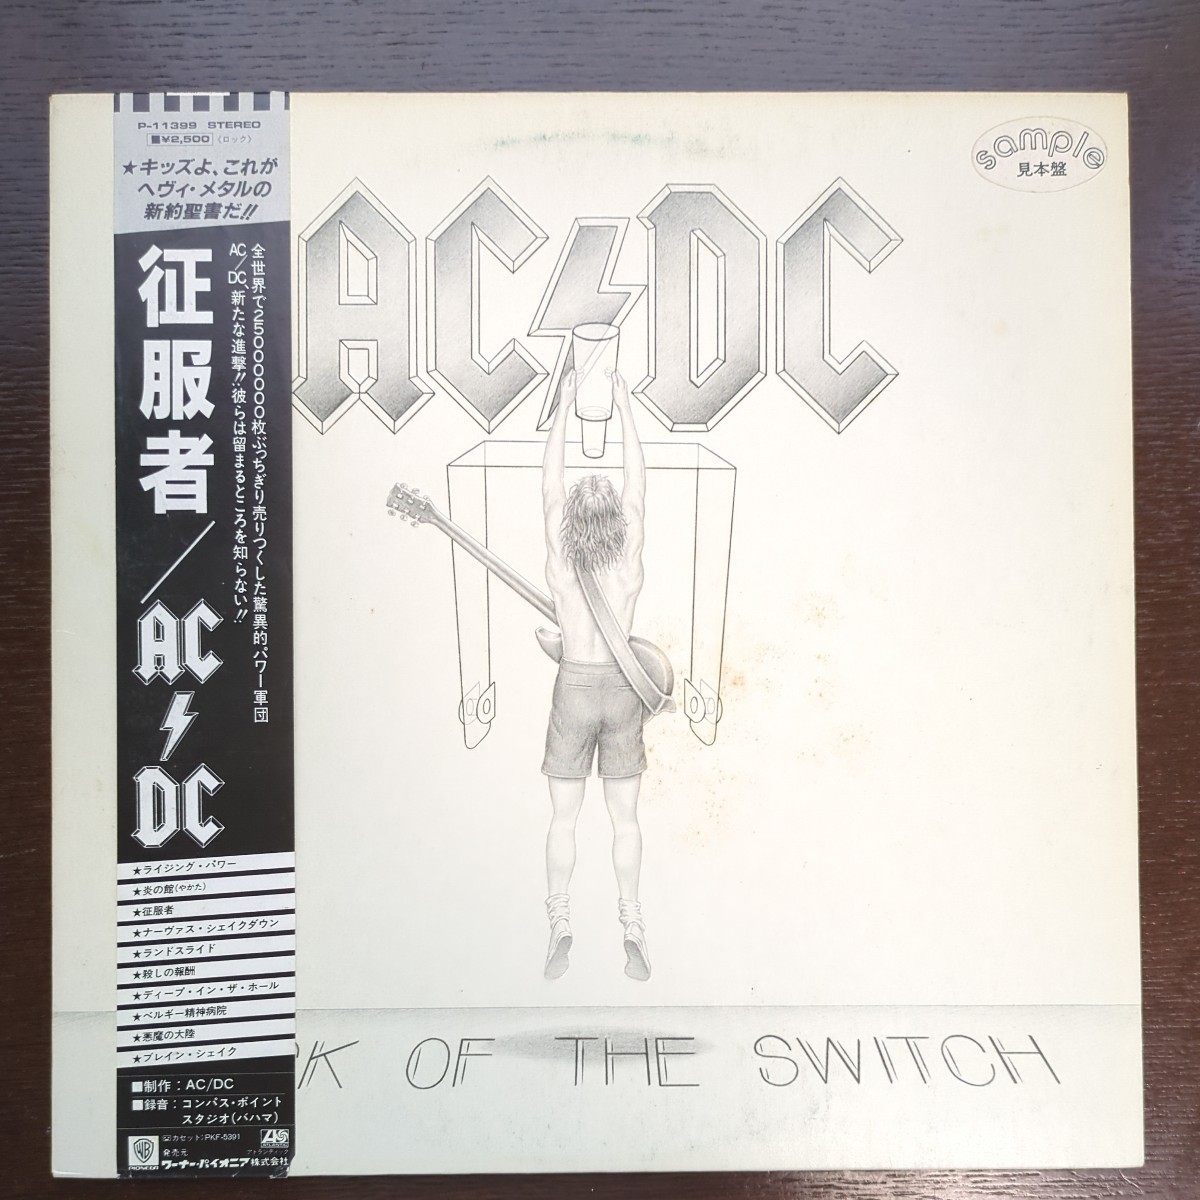 PROMO sample 見本盤 AC/DC FLICK of the Switch 征服者 ac dc record